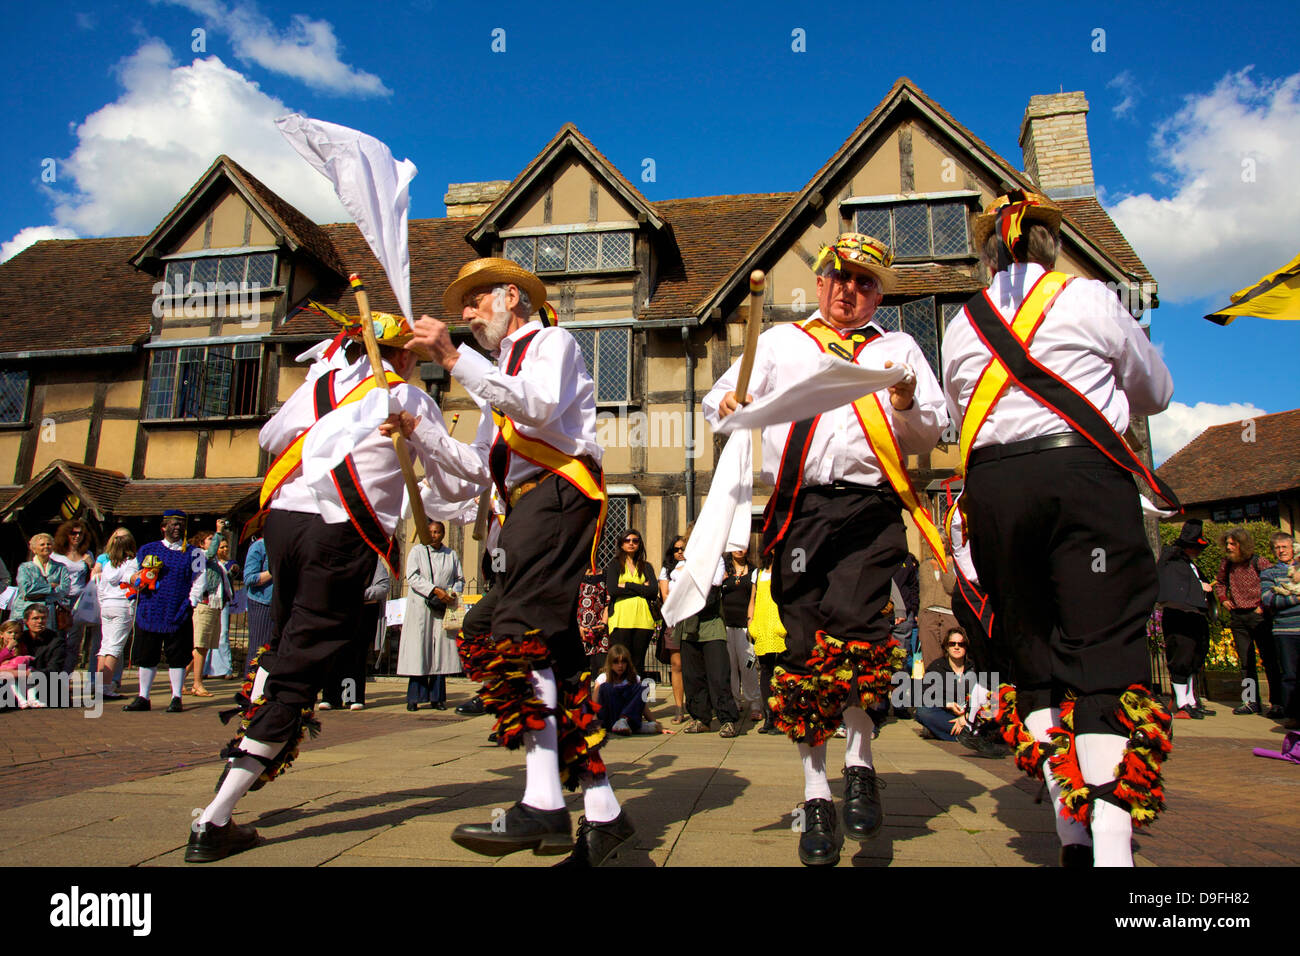 Morris dancing, Stratford upon Avon, Warwickshire, England, UK Banque D'Images